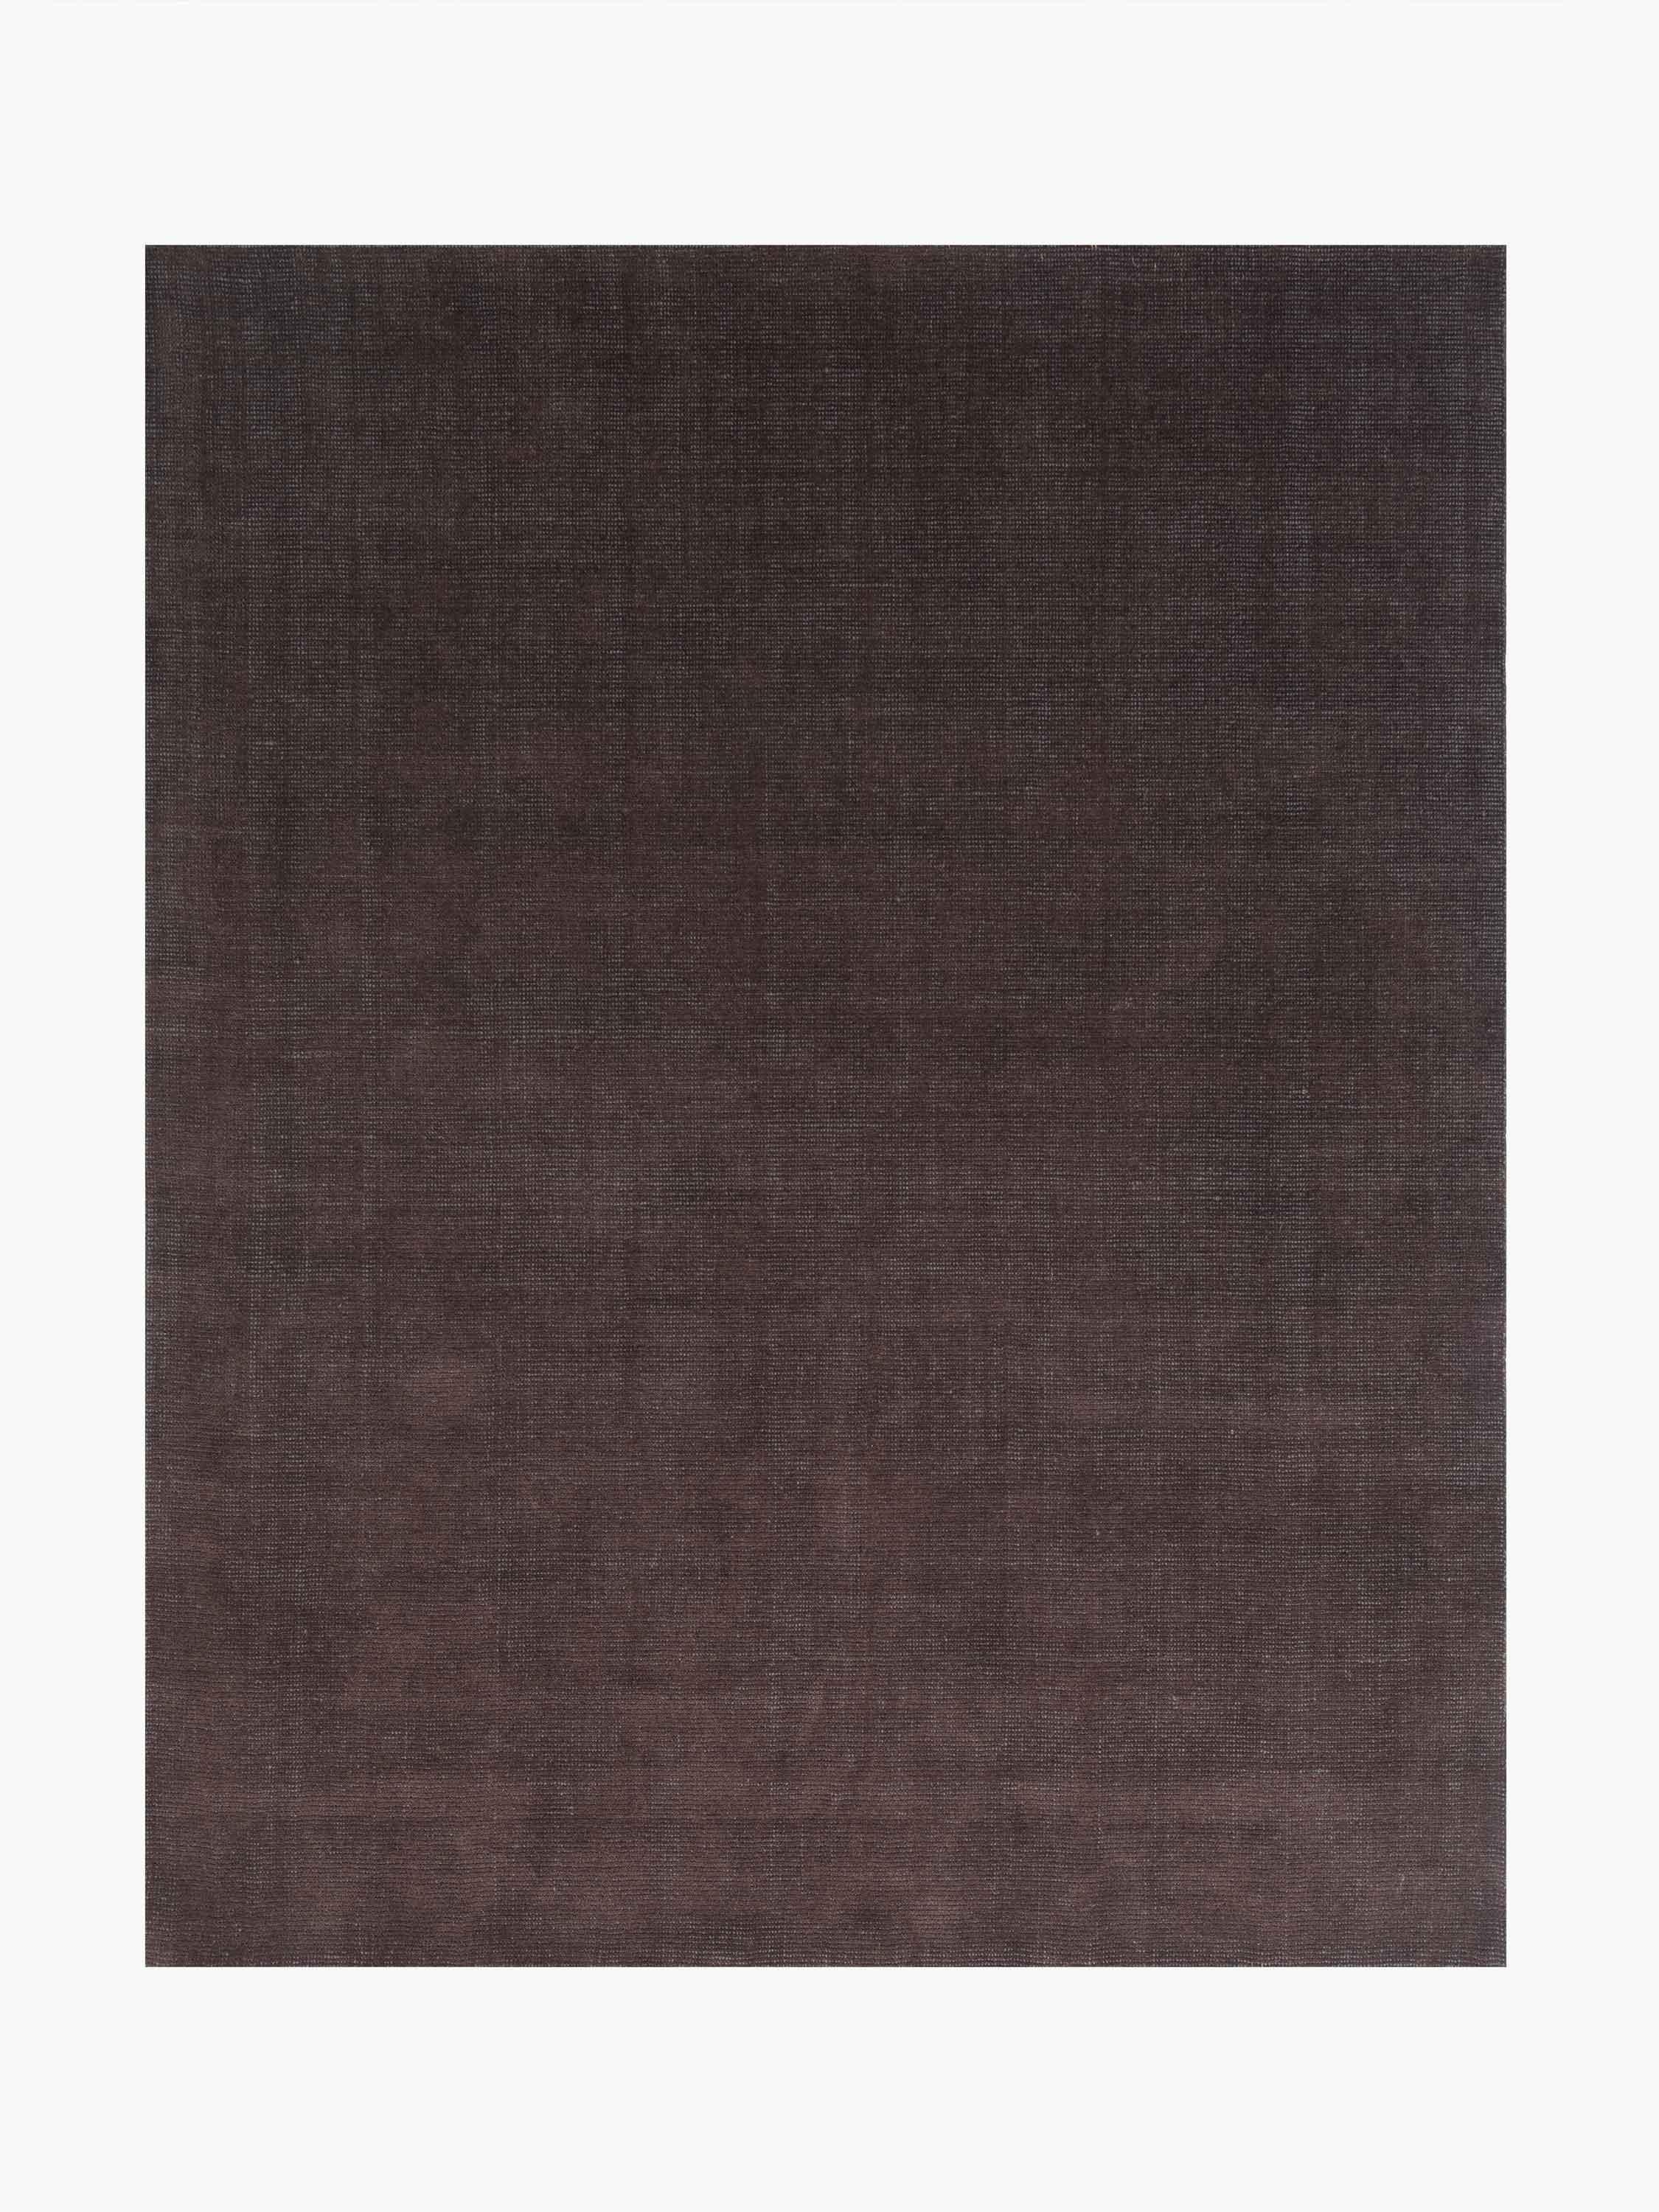 For Sale: Brown (Distressed Wool Espresso) Ben Soleimani Distressed Wool Rug 9'x12' 3